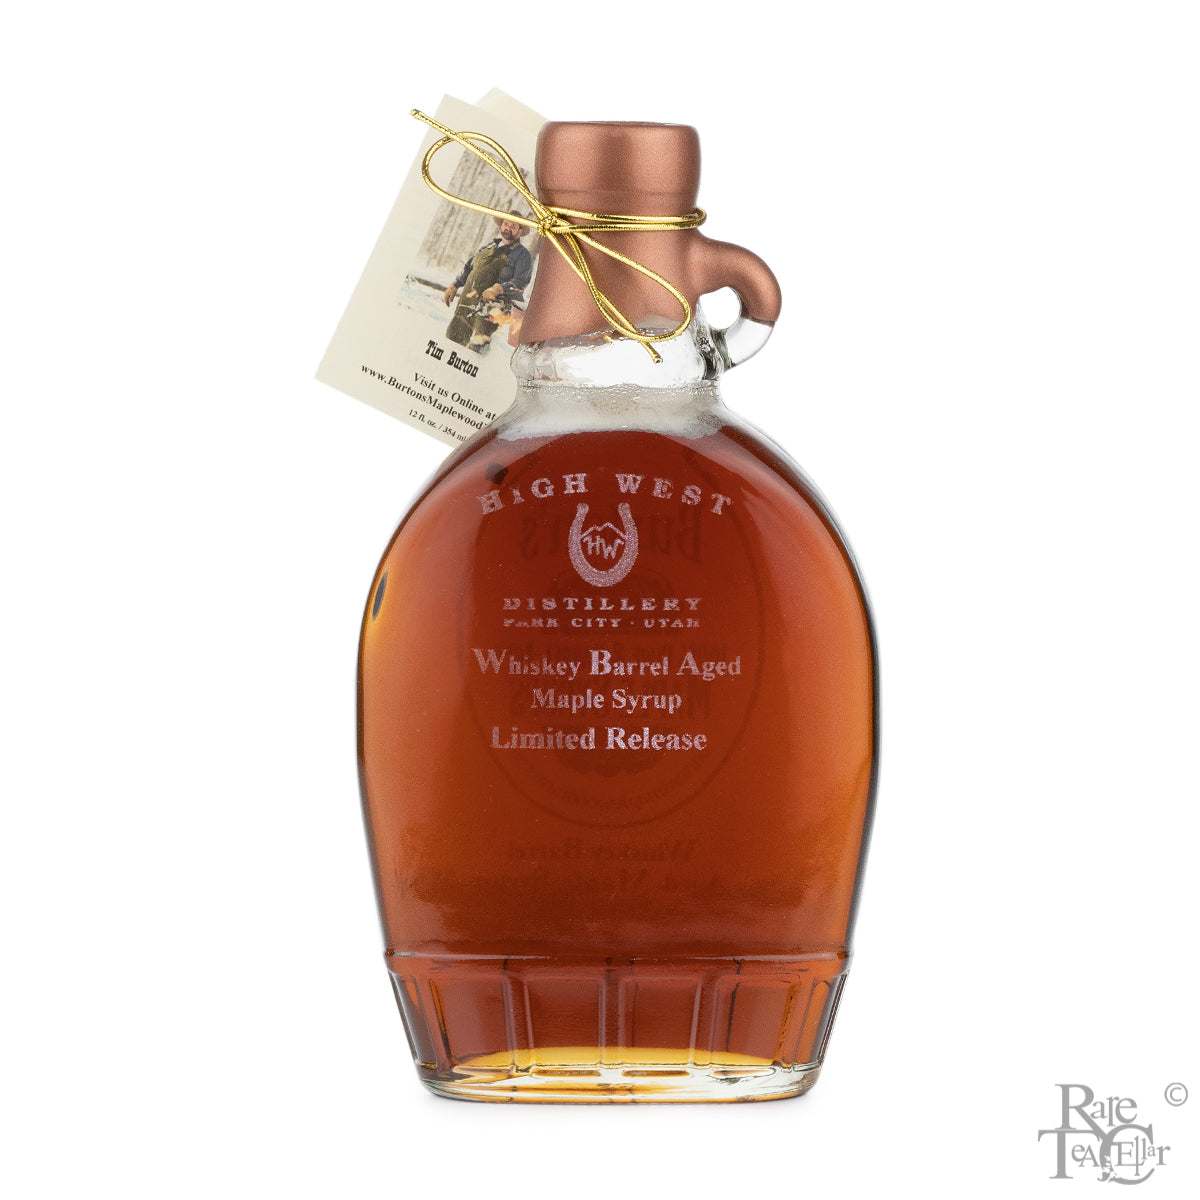 Burtons High West Whiskey Maple Syrup Rare Tea Cellar